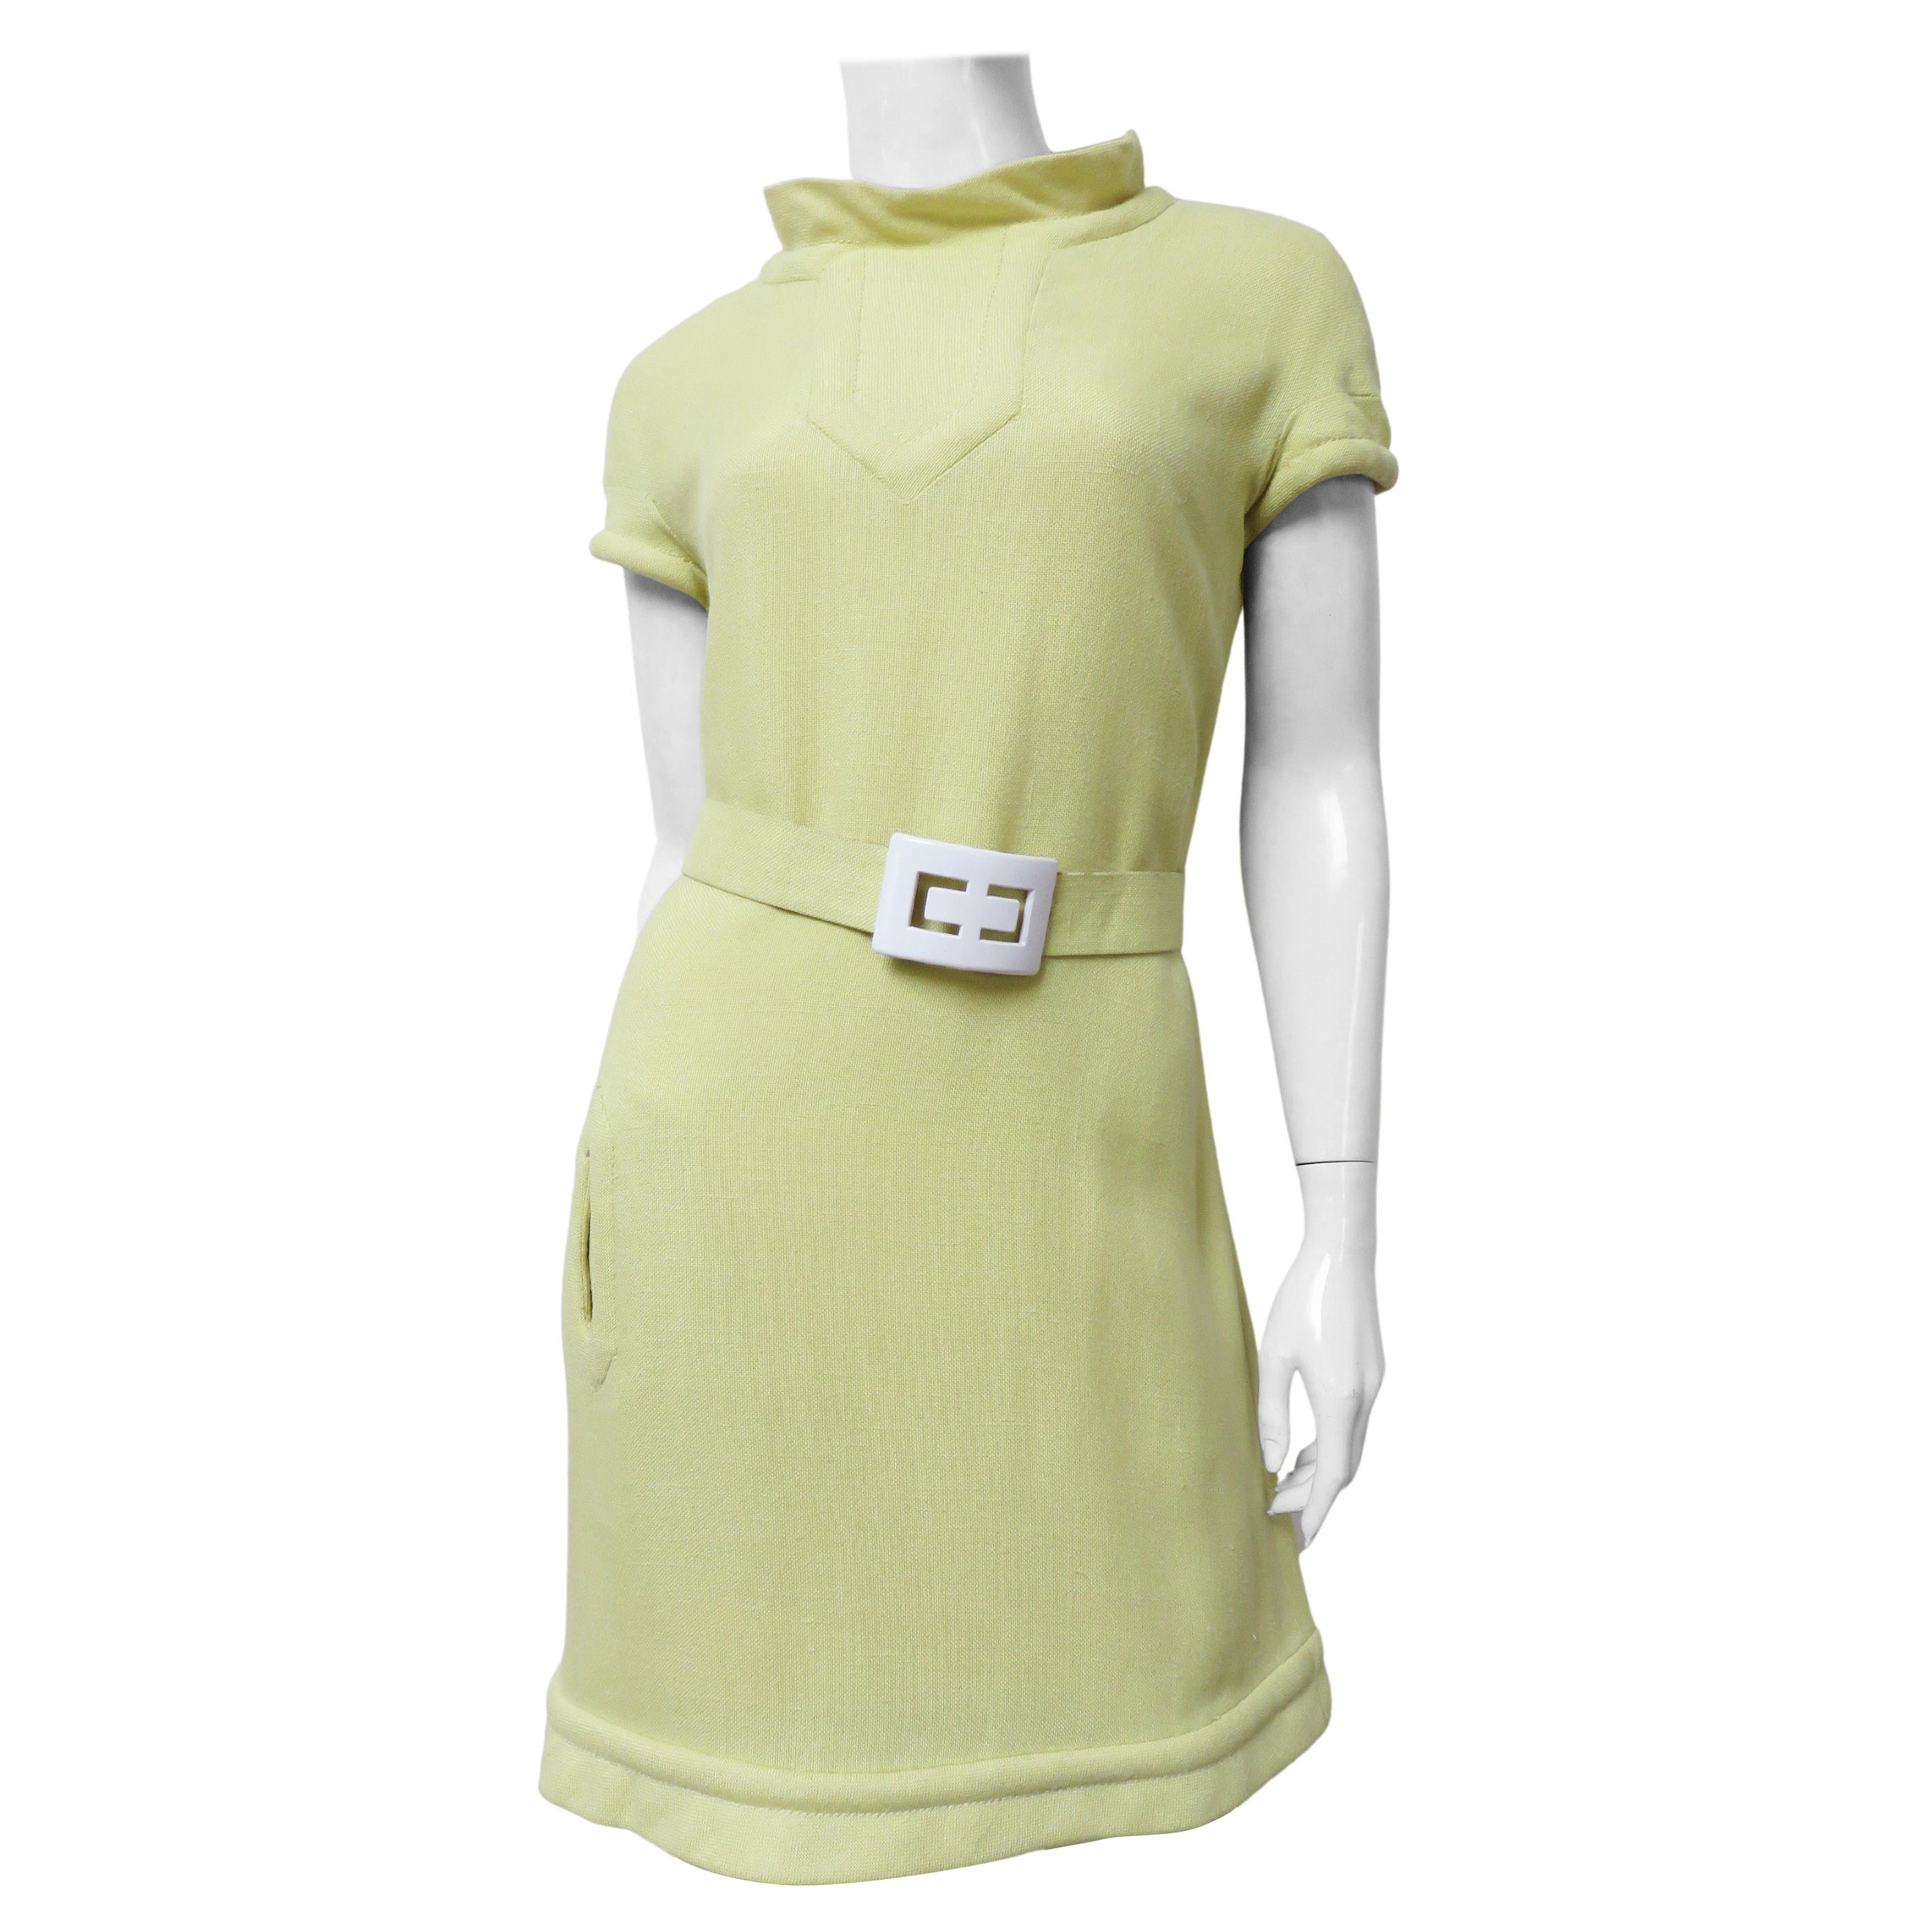 Pierre Cardin Iconic 1960s Dress For Sale